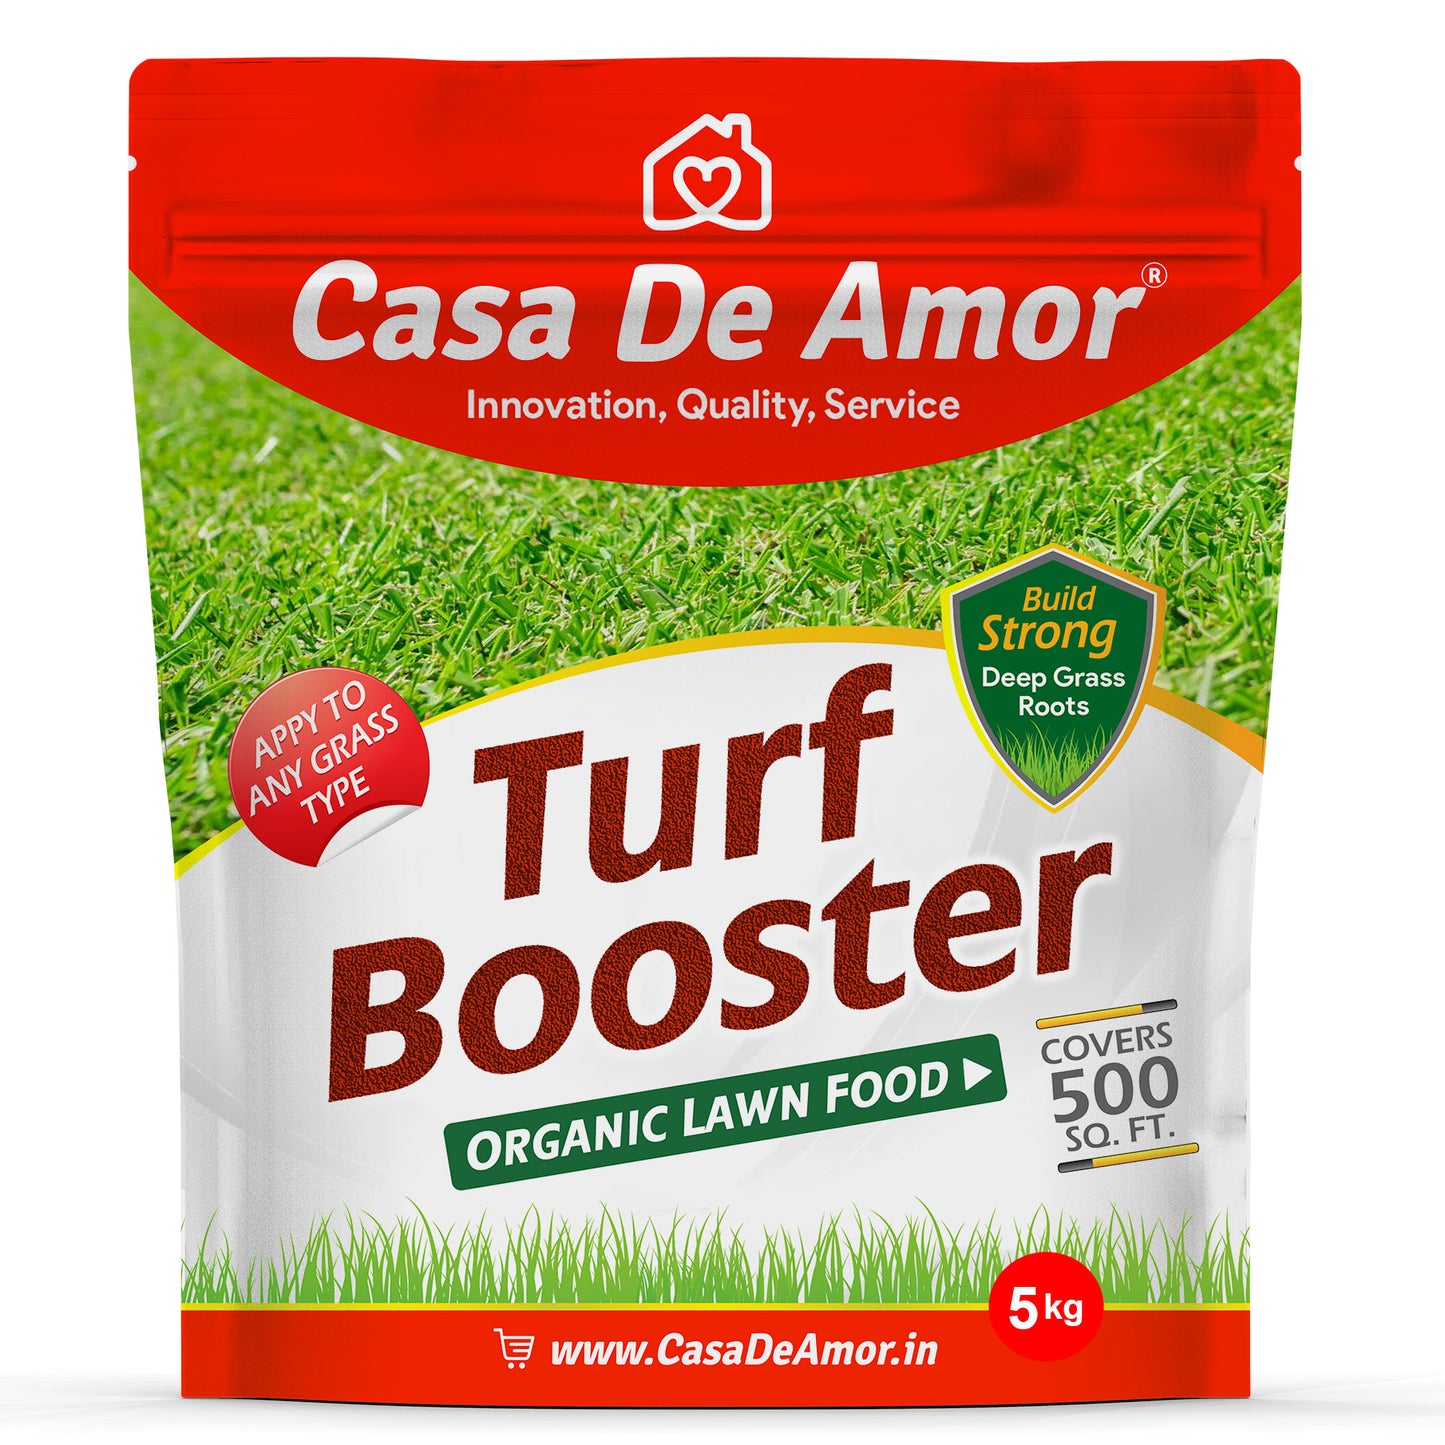 Casa De Amor Turf Booster Lawn Fertilizer, Build Thick-Green Lawns